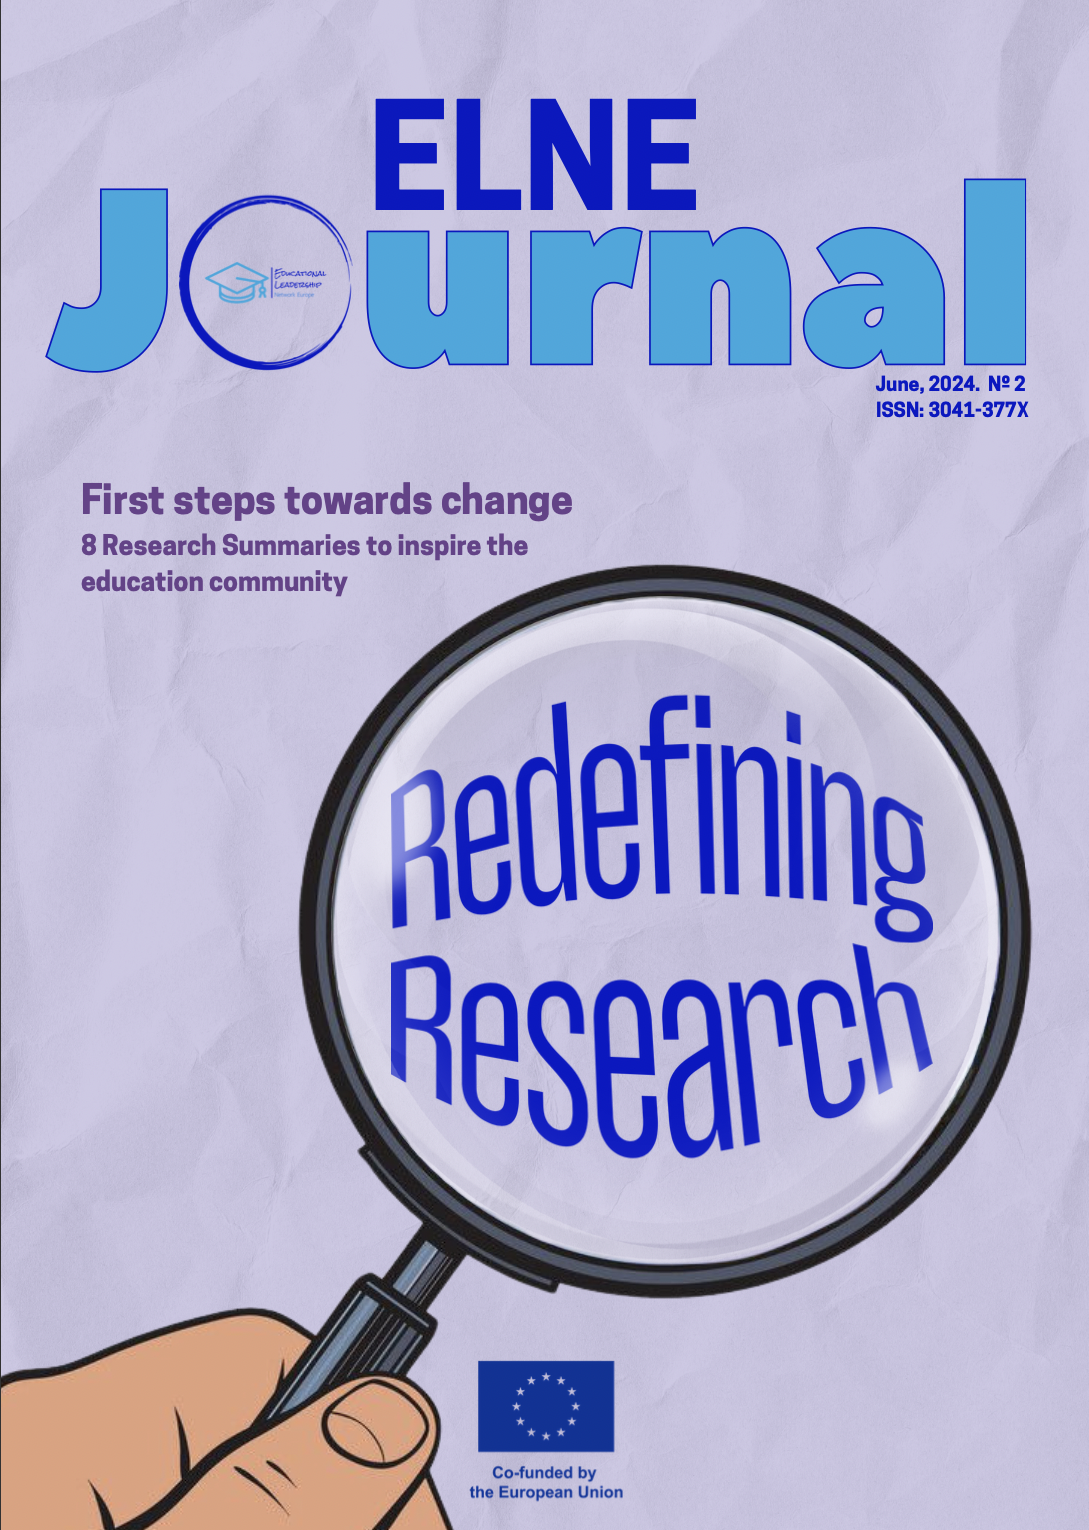 ELNE Journal: Redefining Research